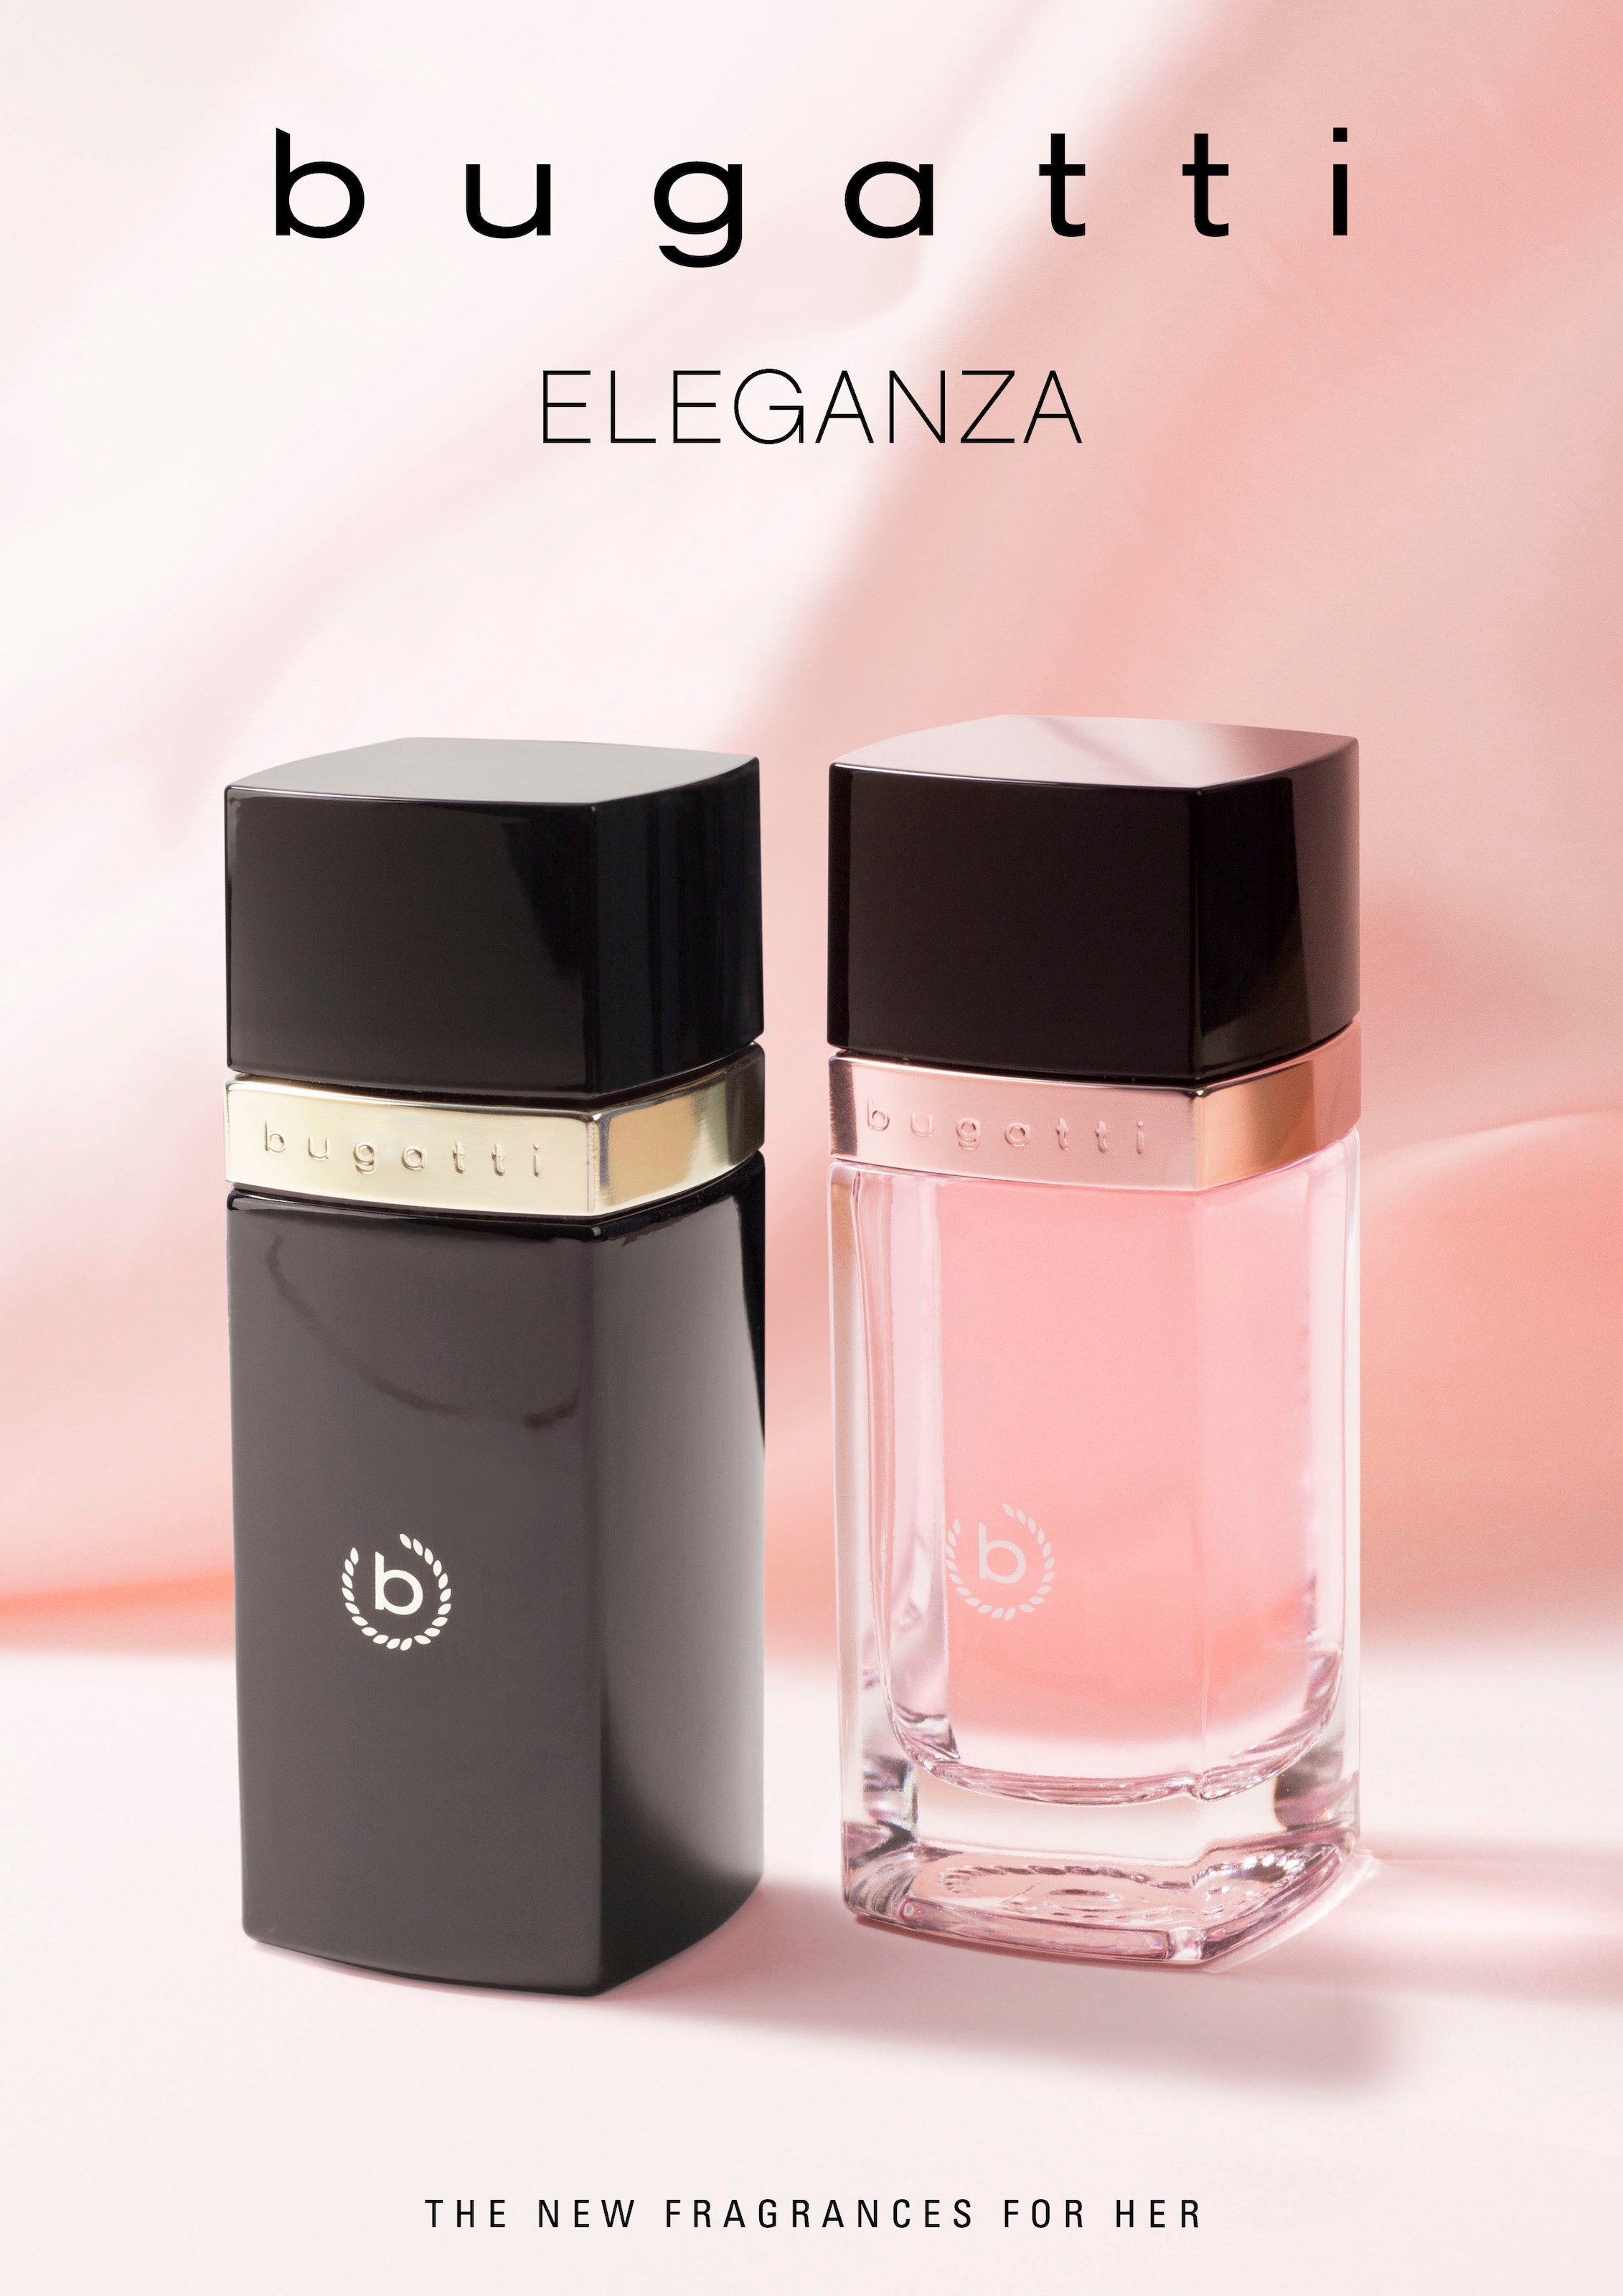 bugatti Eau 60 »Eleganza im de Parfum bestellen ml« Online-Shop EdP